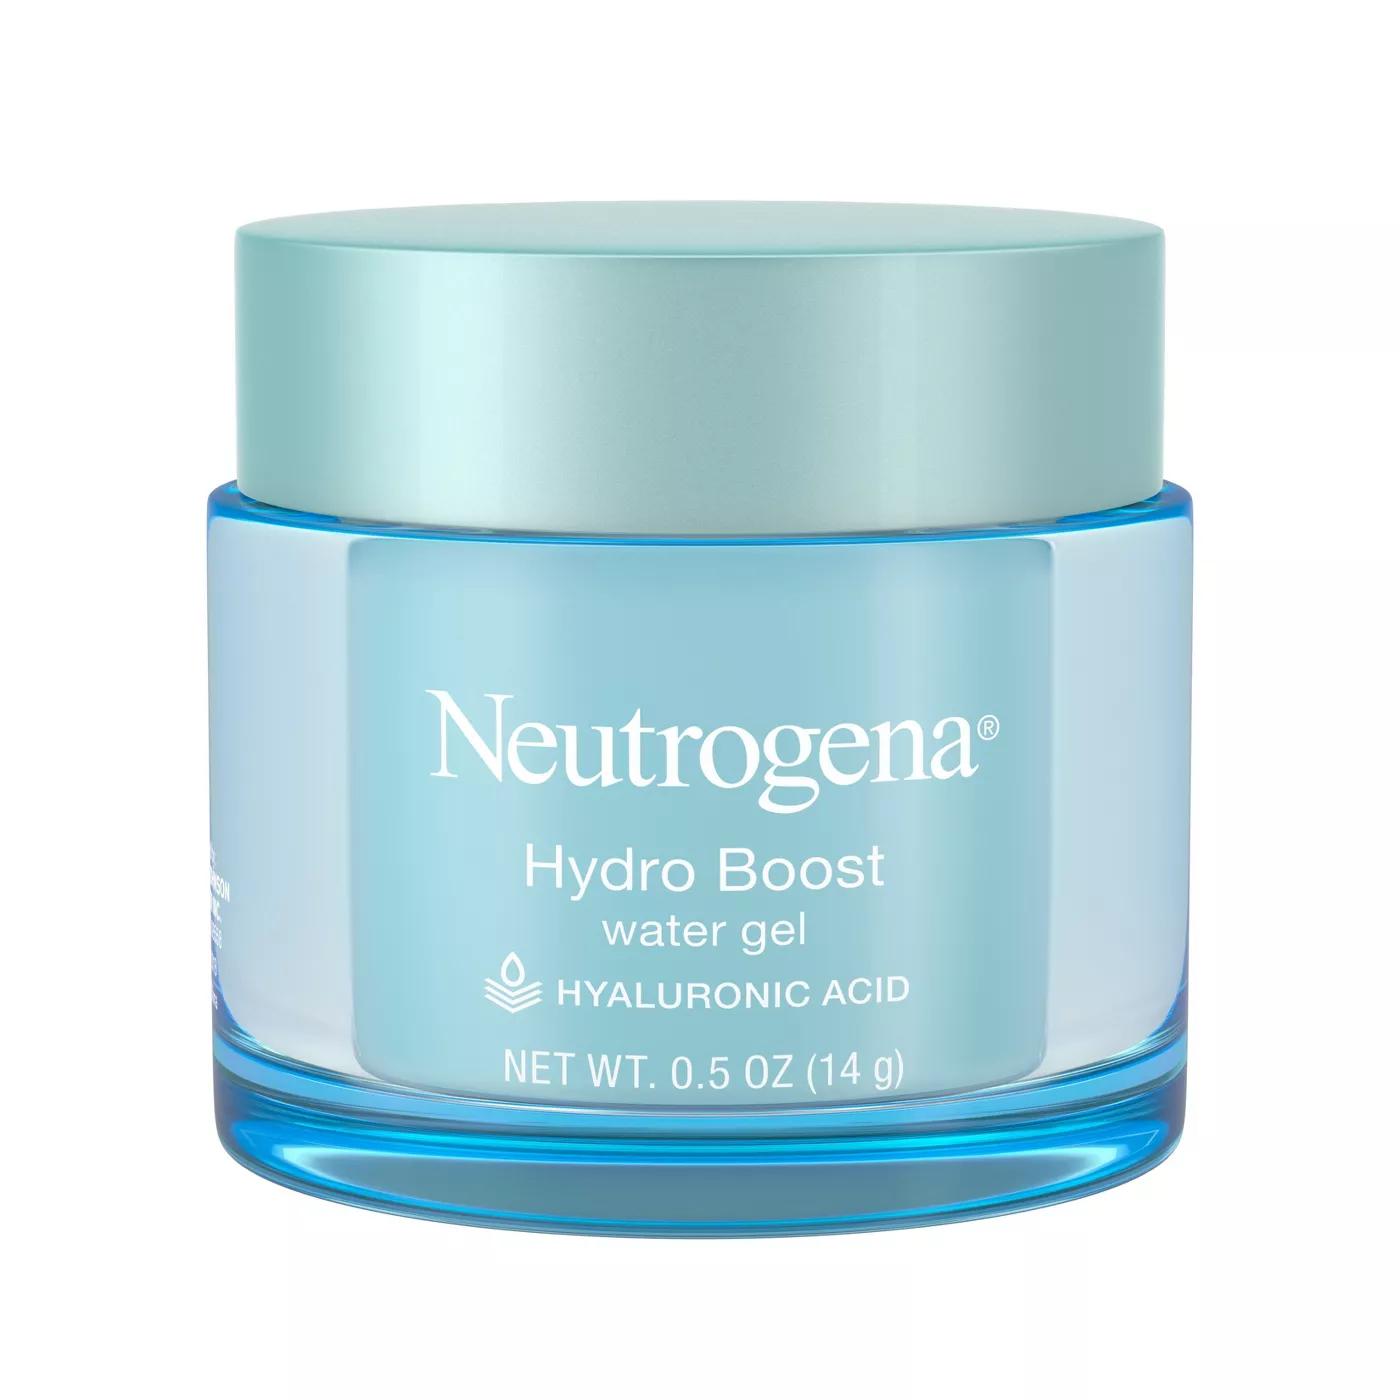 Neutrogena Hydro Boost Hydrating Water Gel Face Moisturizer - .5oz - image 2 of 14